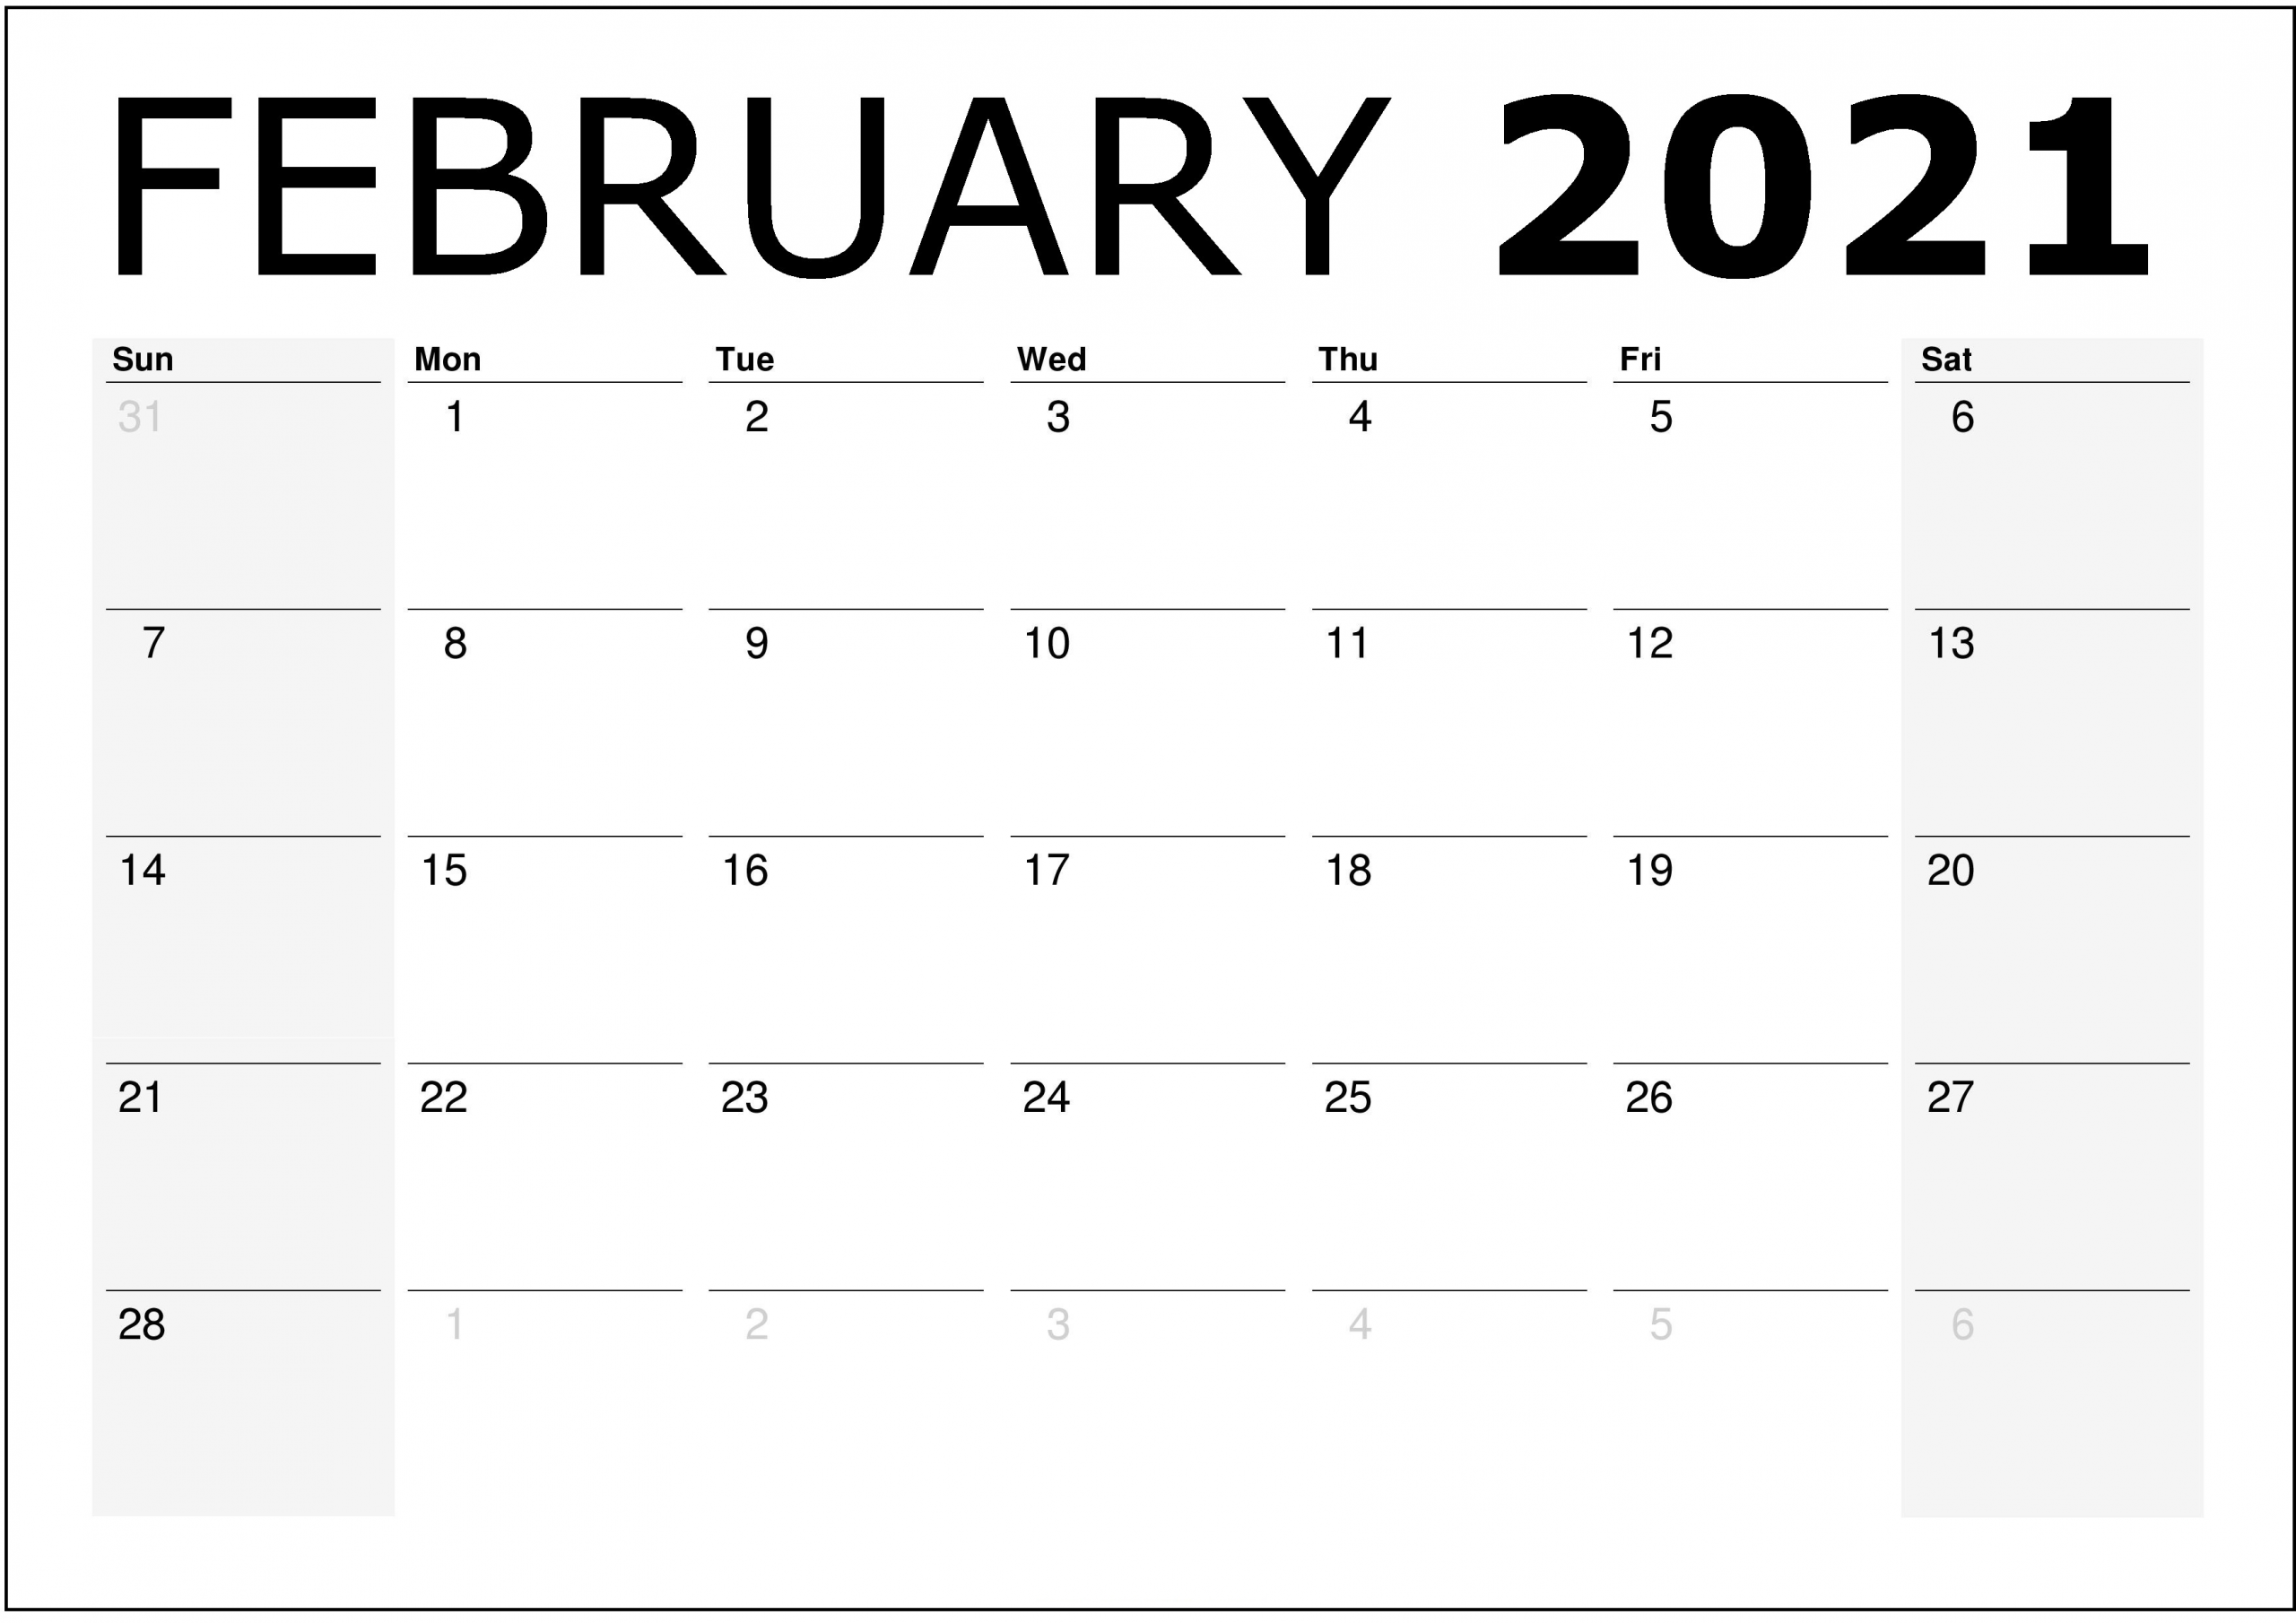 February 2021 Calendar With Holidays - Printable Calendar